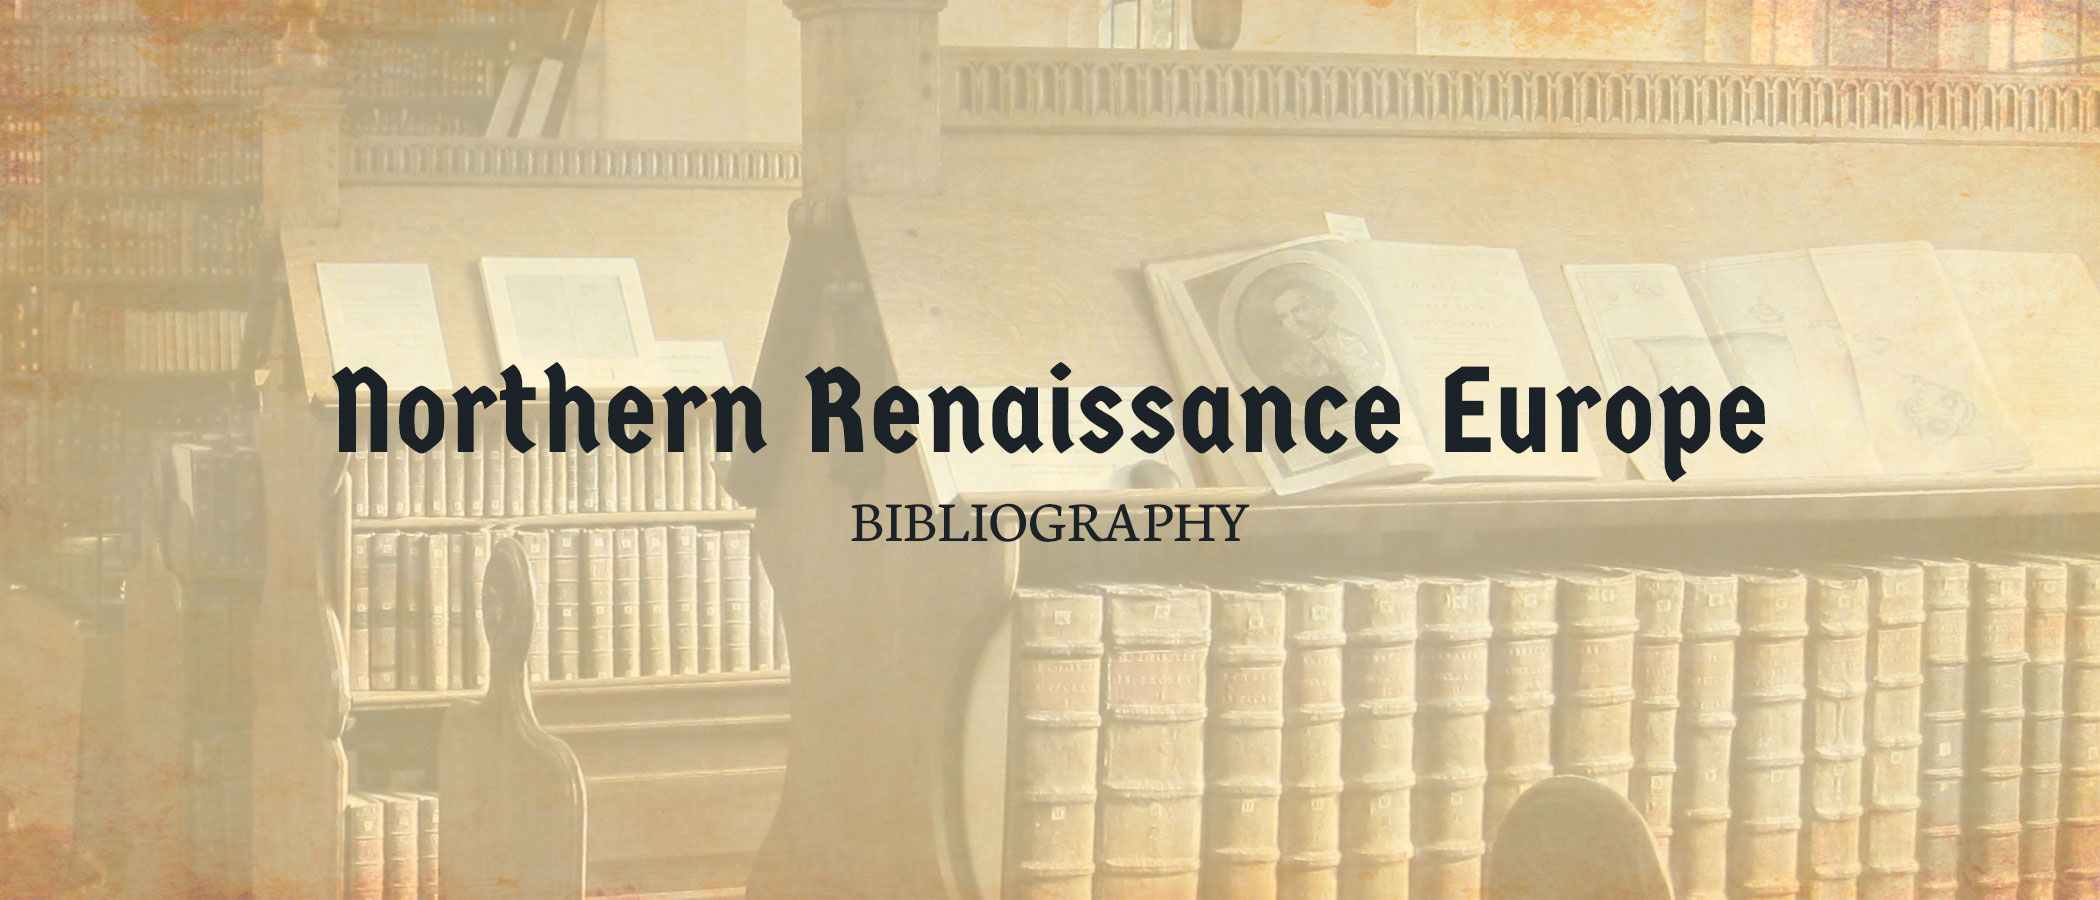 Bibliography 03: Northern Renaissance Europe